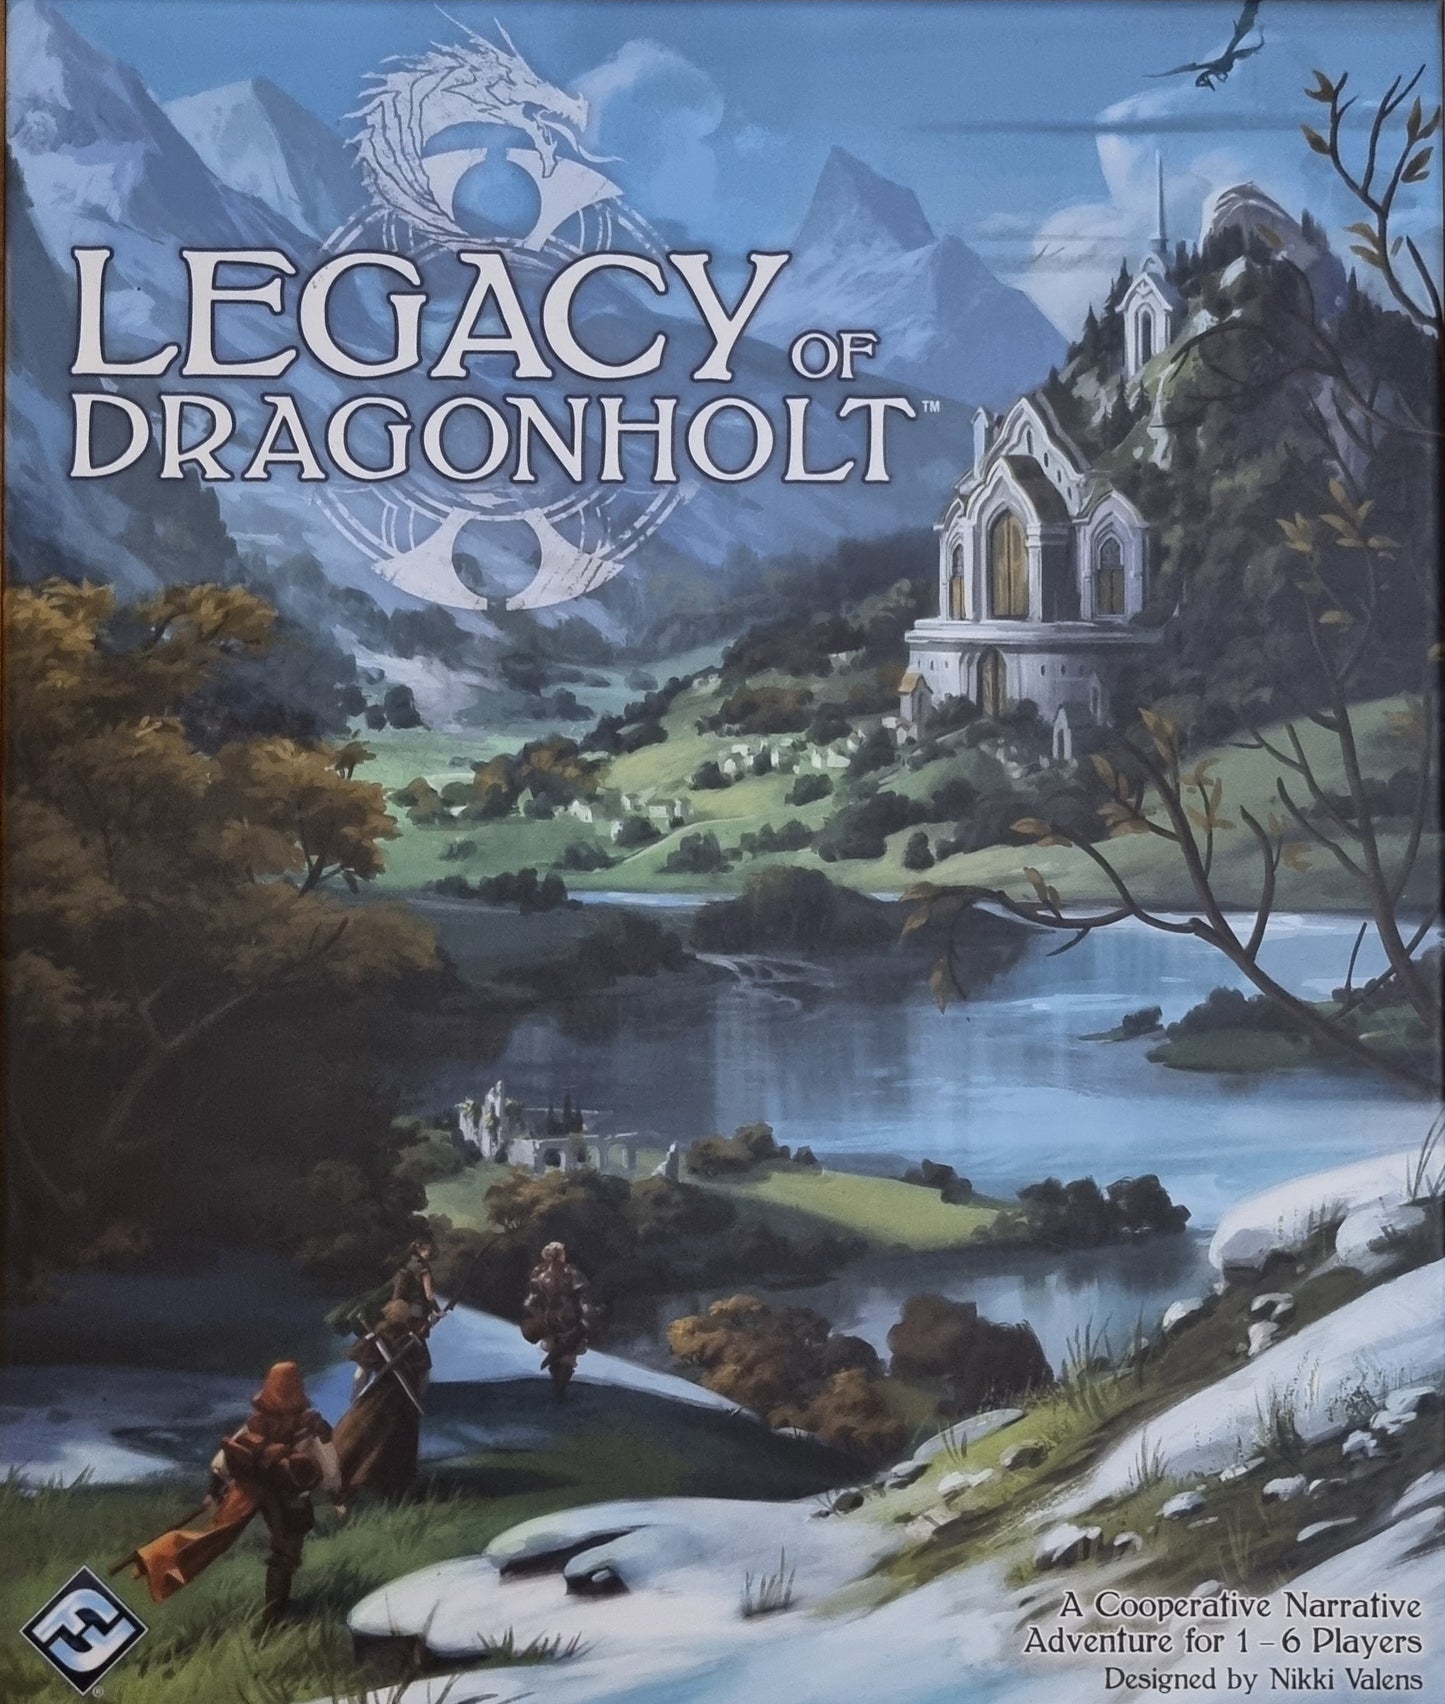 Legacy of dragonholt